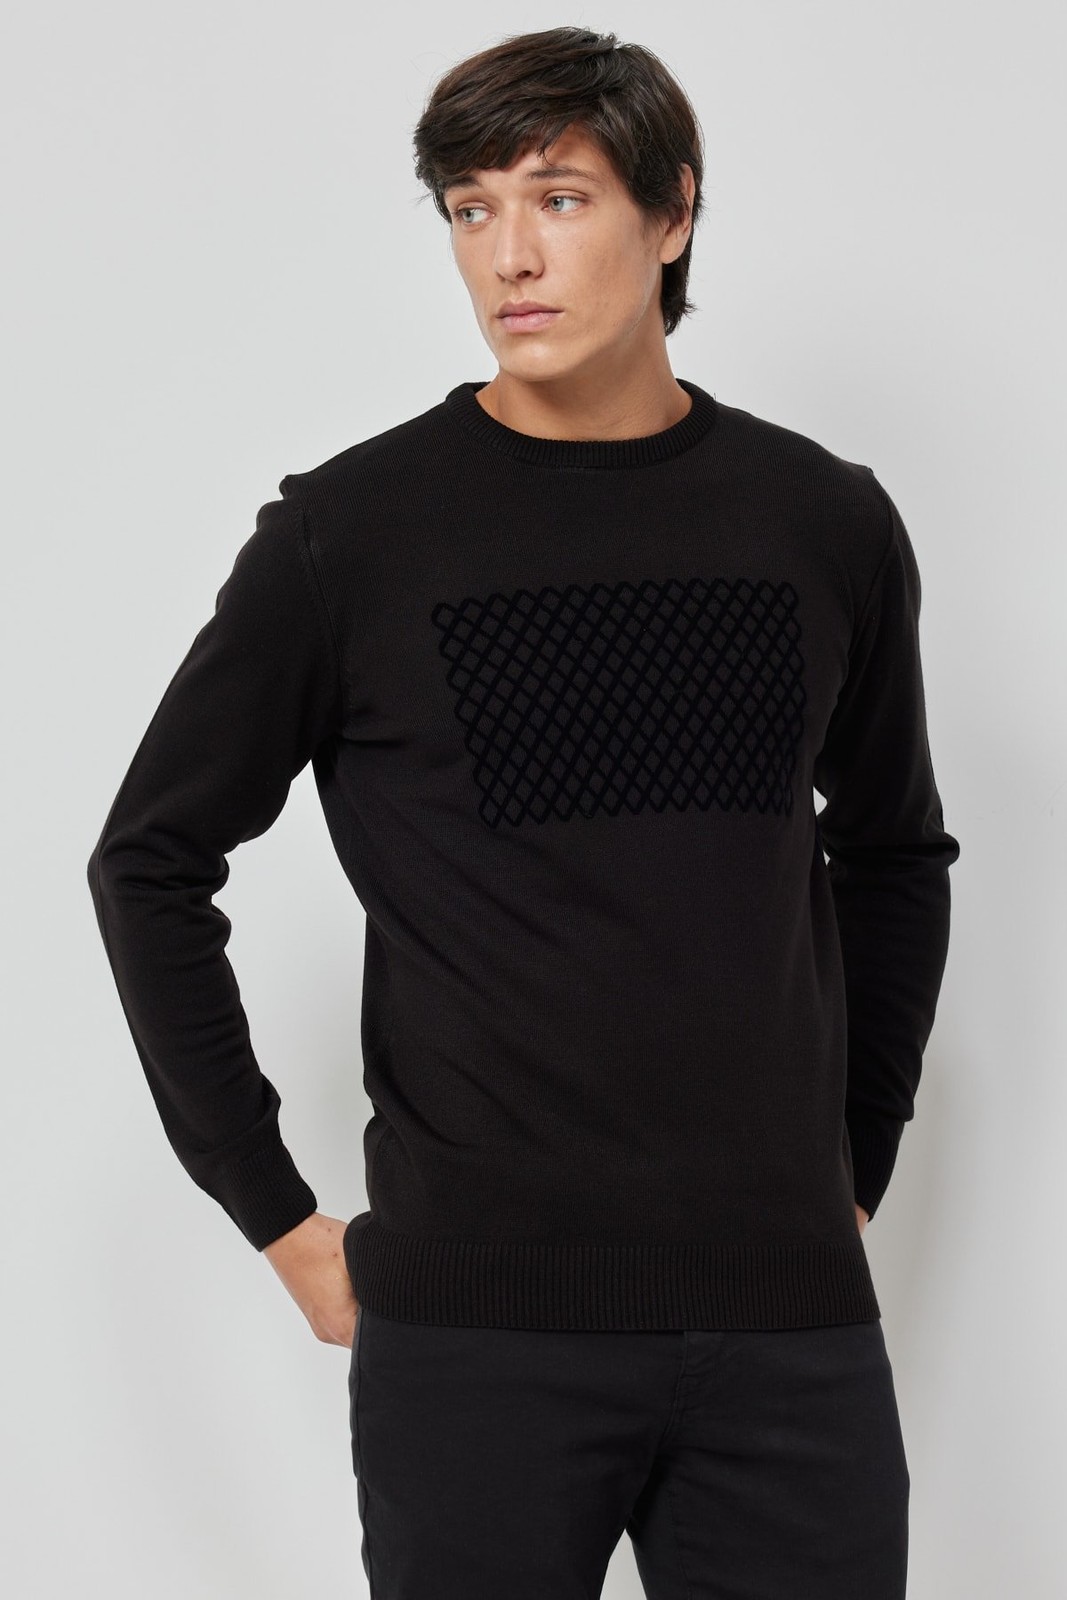 ALTINYILDIZ CLASSICS Men's Black Anti-Pilling Anti-pilling Standard Fit Crew Neck Front Printed Knitwear Sweater